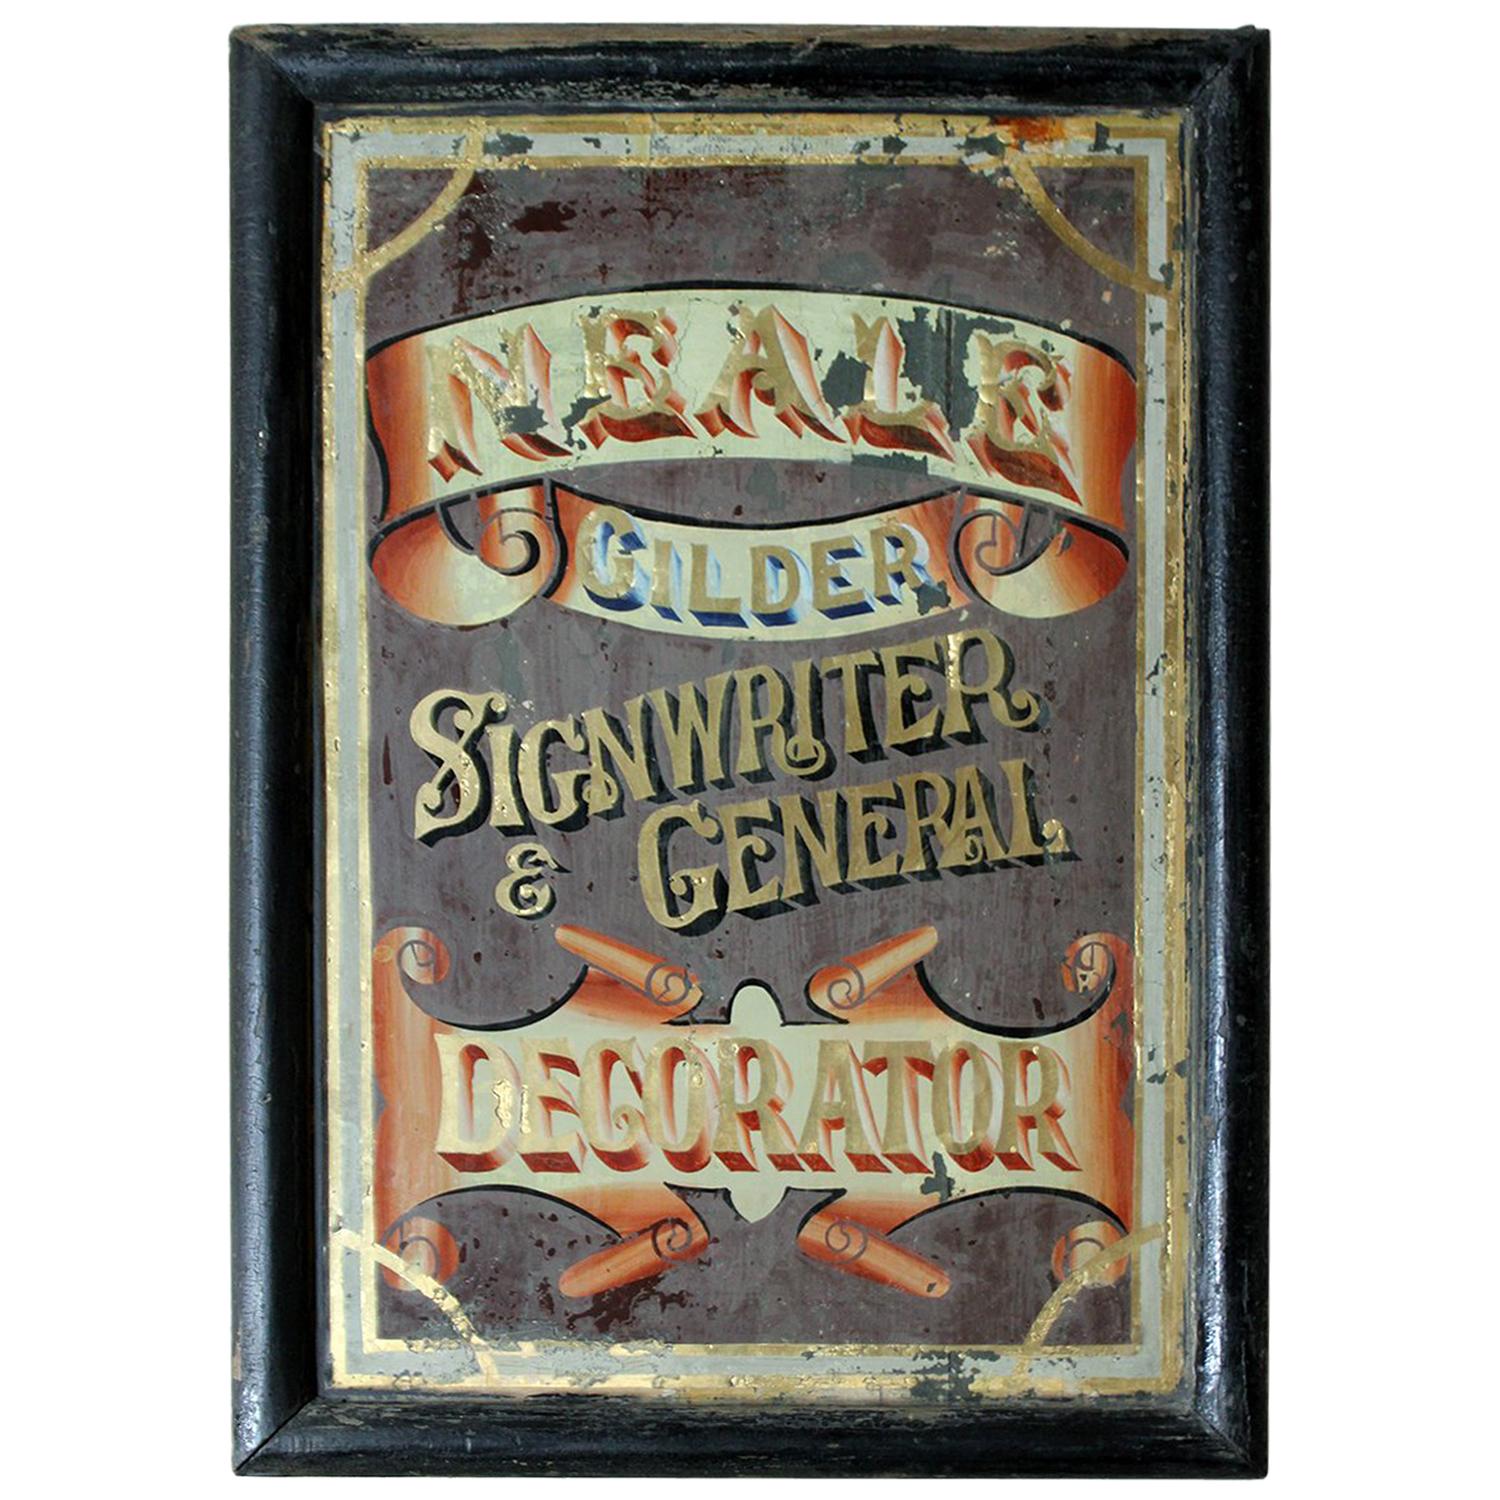 Late Victorian Reverse Glass Sign Written Advertising Mirror, circa 1870-1880